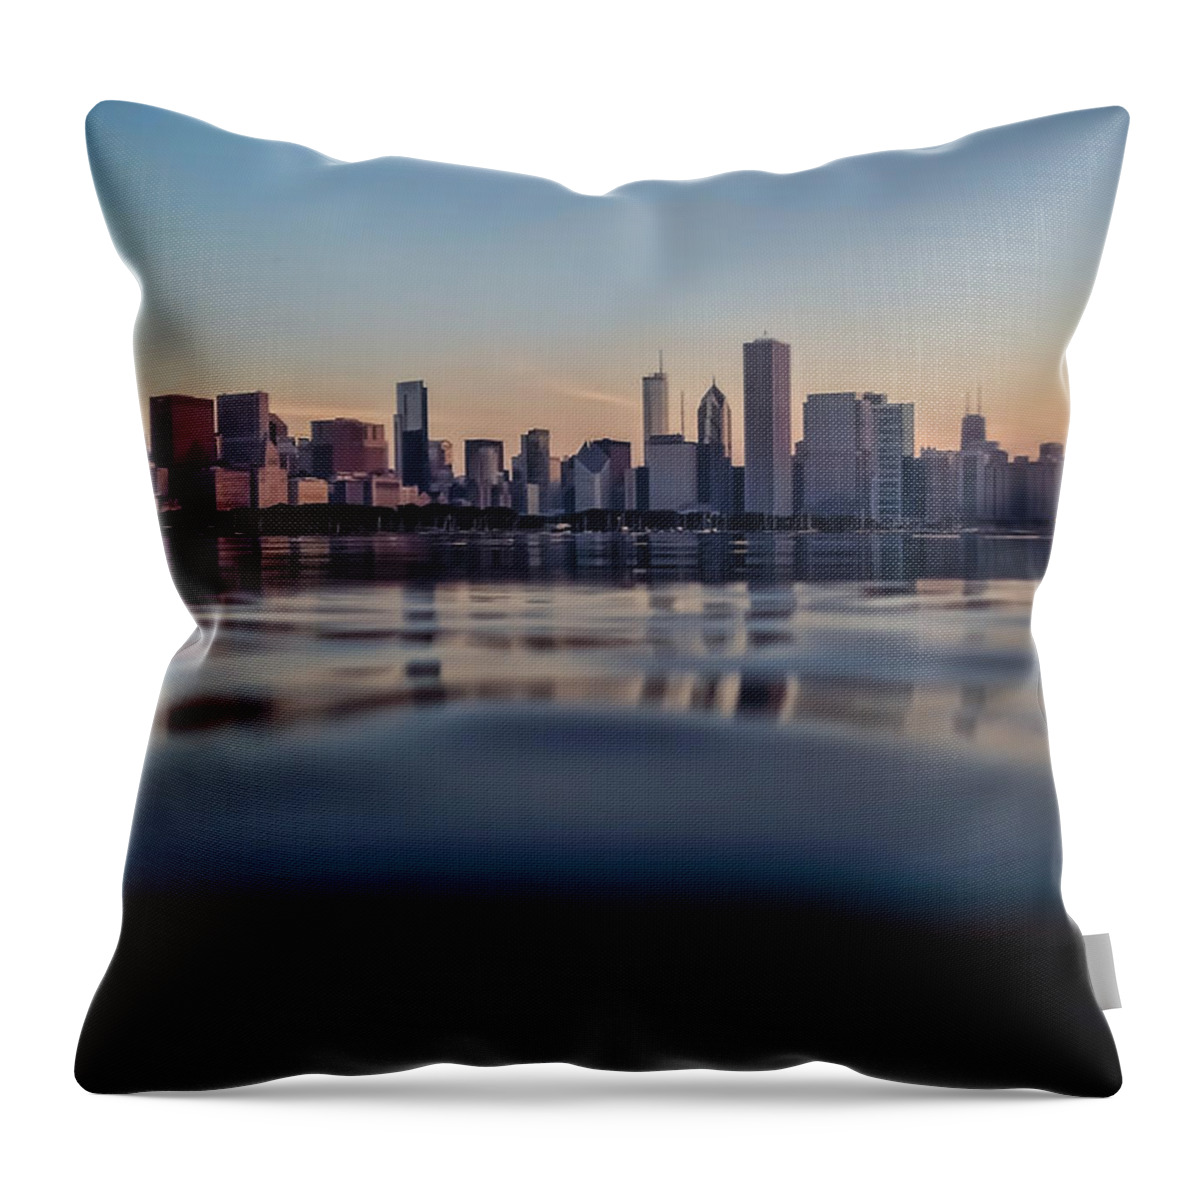 Chicago Skyline Throw Pillow featuring the photograph Chicago skyline from half underwater by Sven Brogren